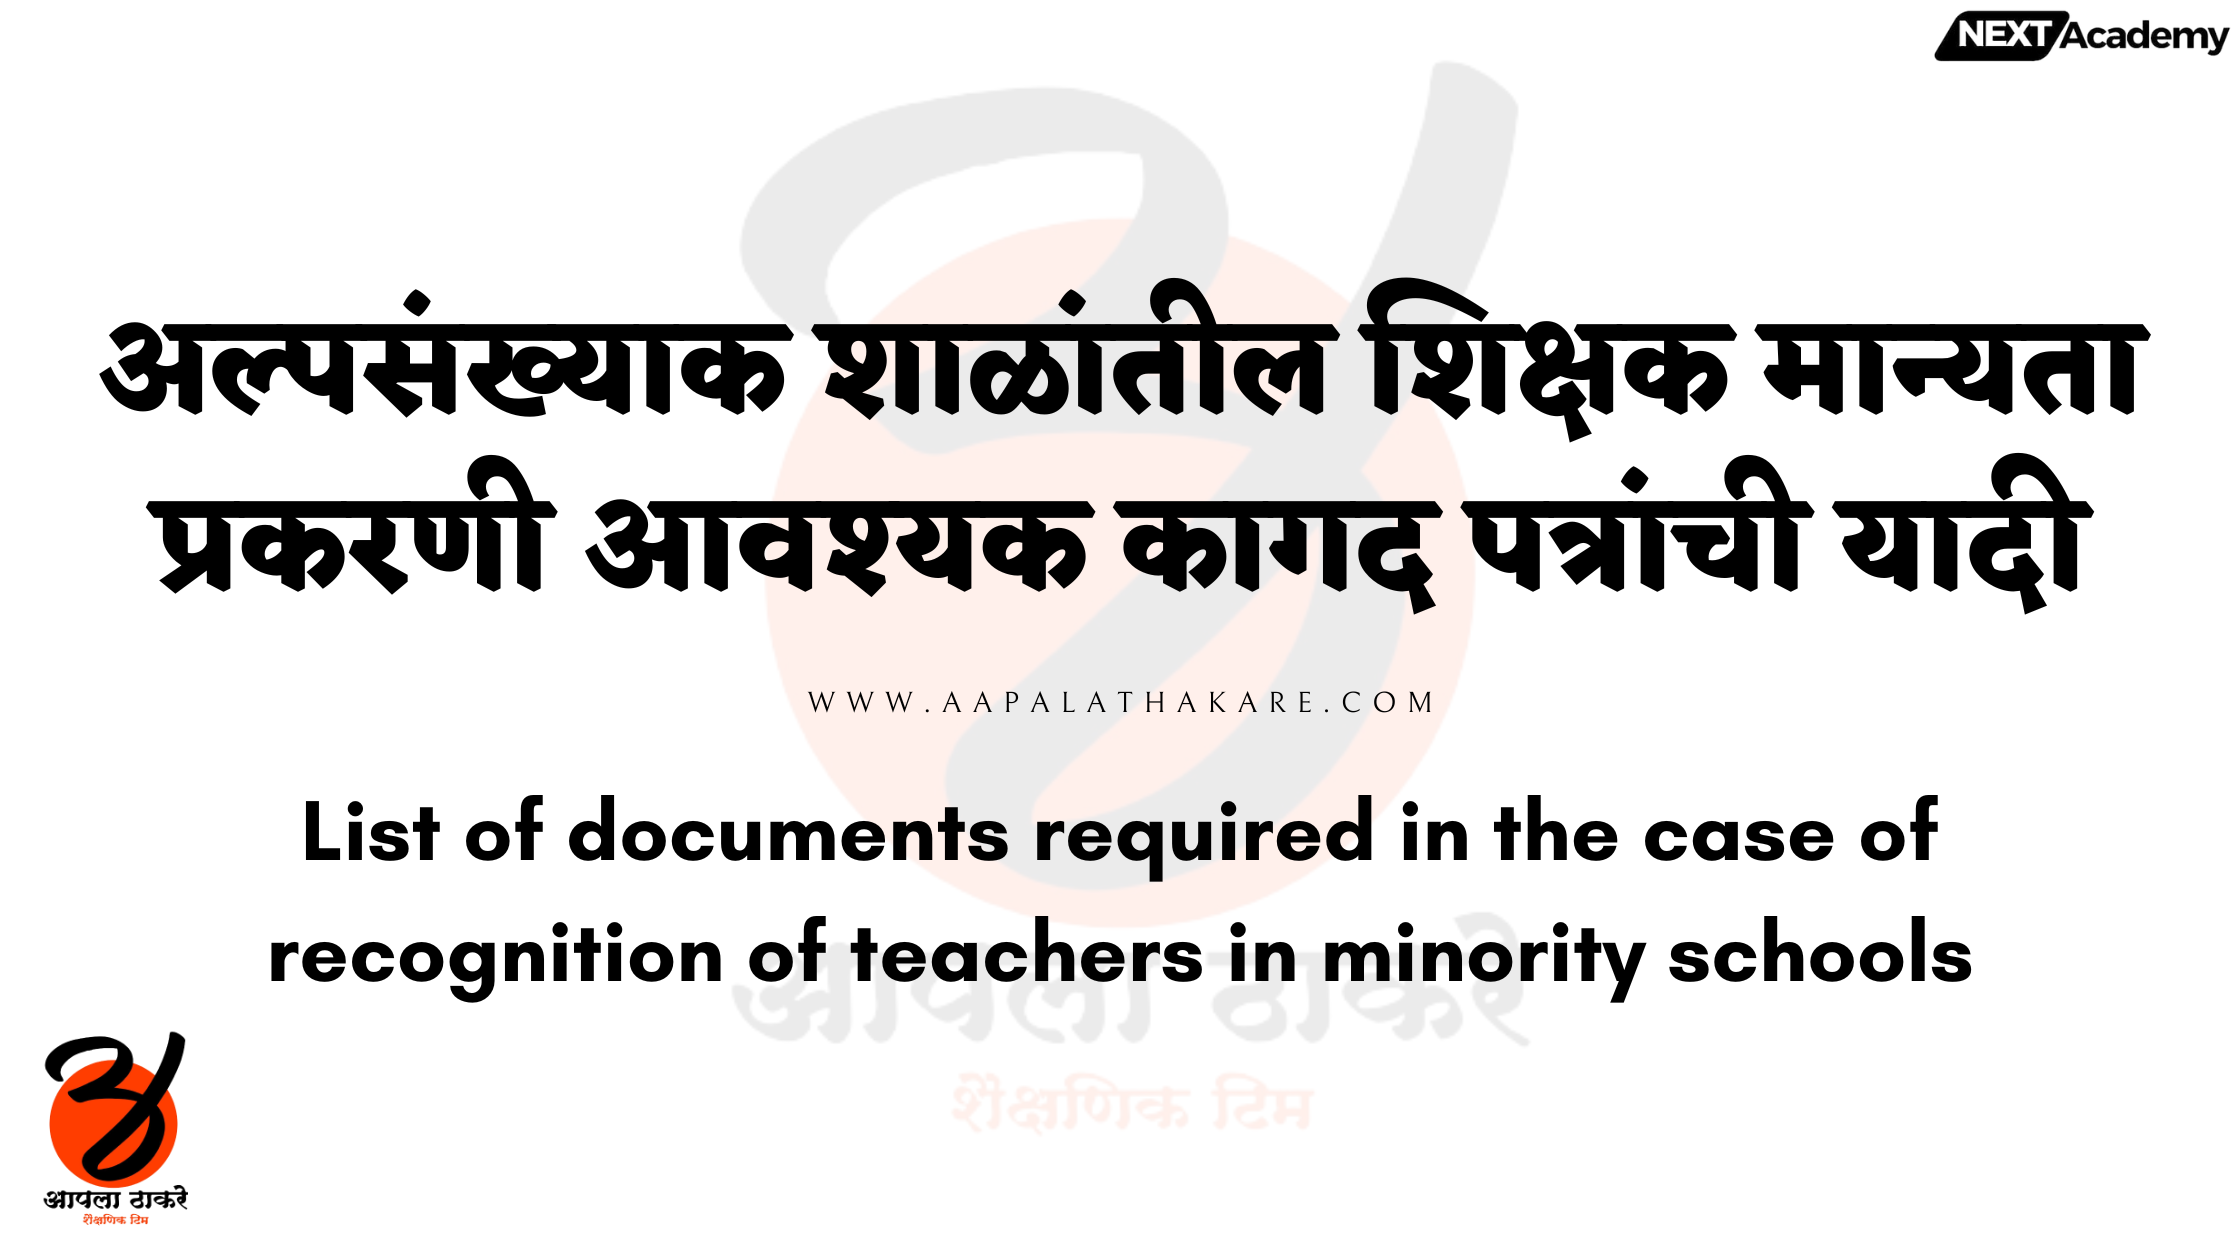 अल्पसंख्याक शाळांतील शिक्षक मान्यता प्रकरणी आवश्यक कागद पत्रांची यादी  List of documents required in the case of recognition of teachers in minority schools